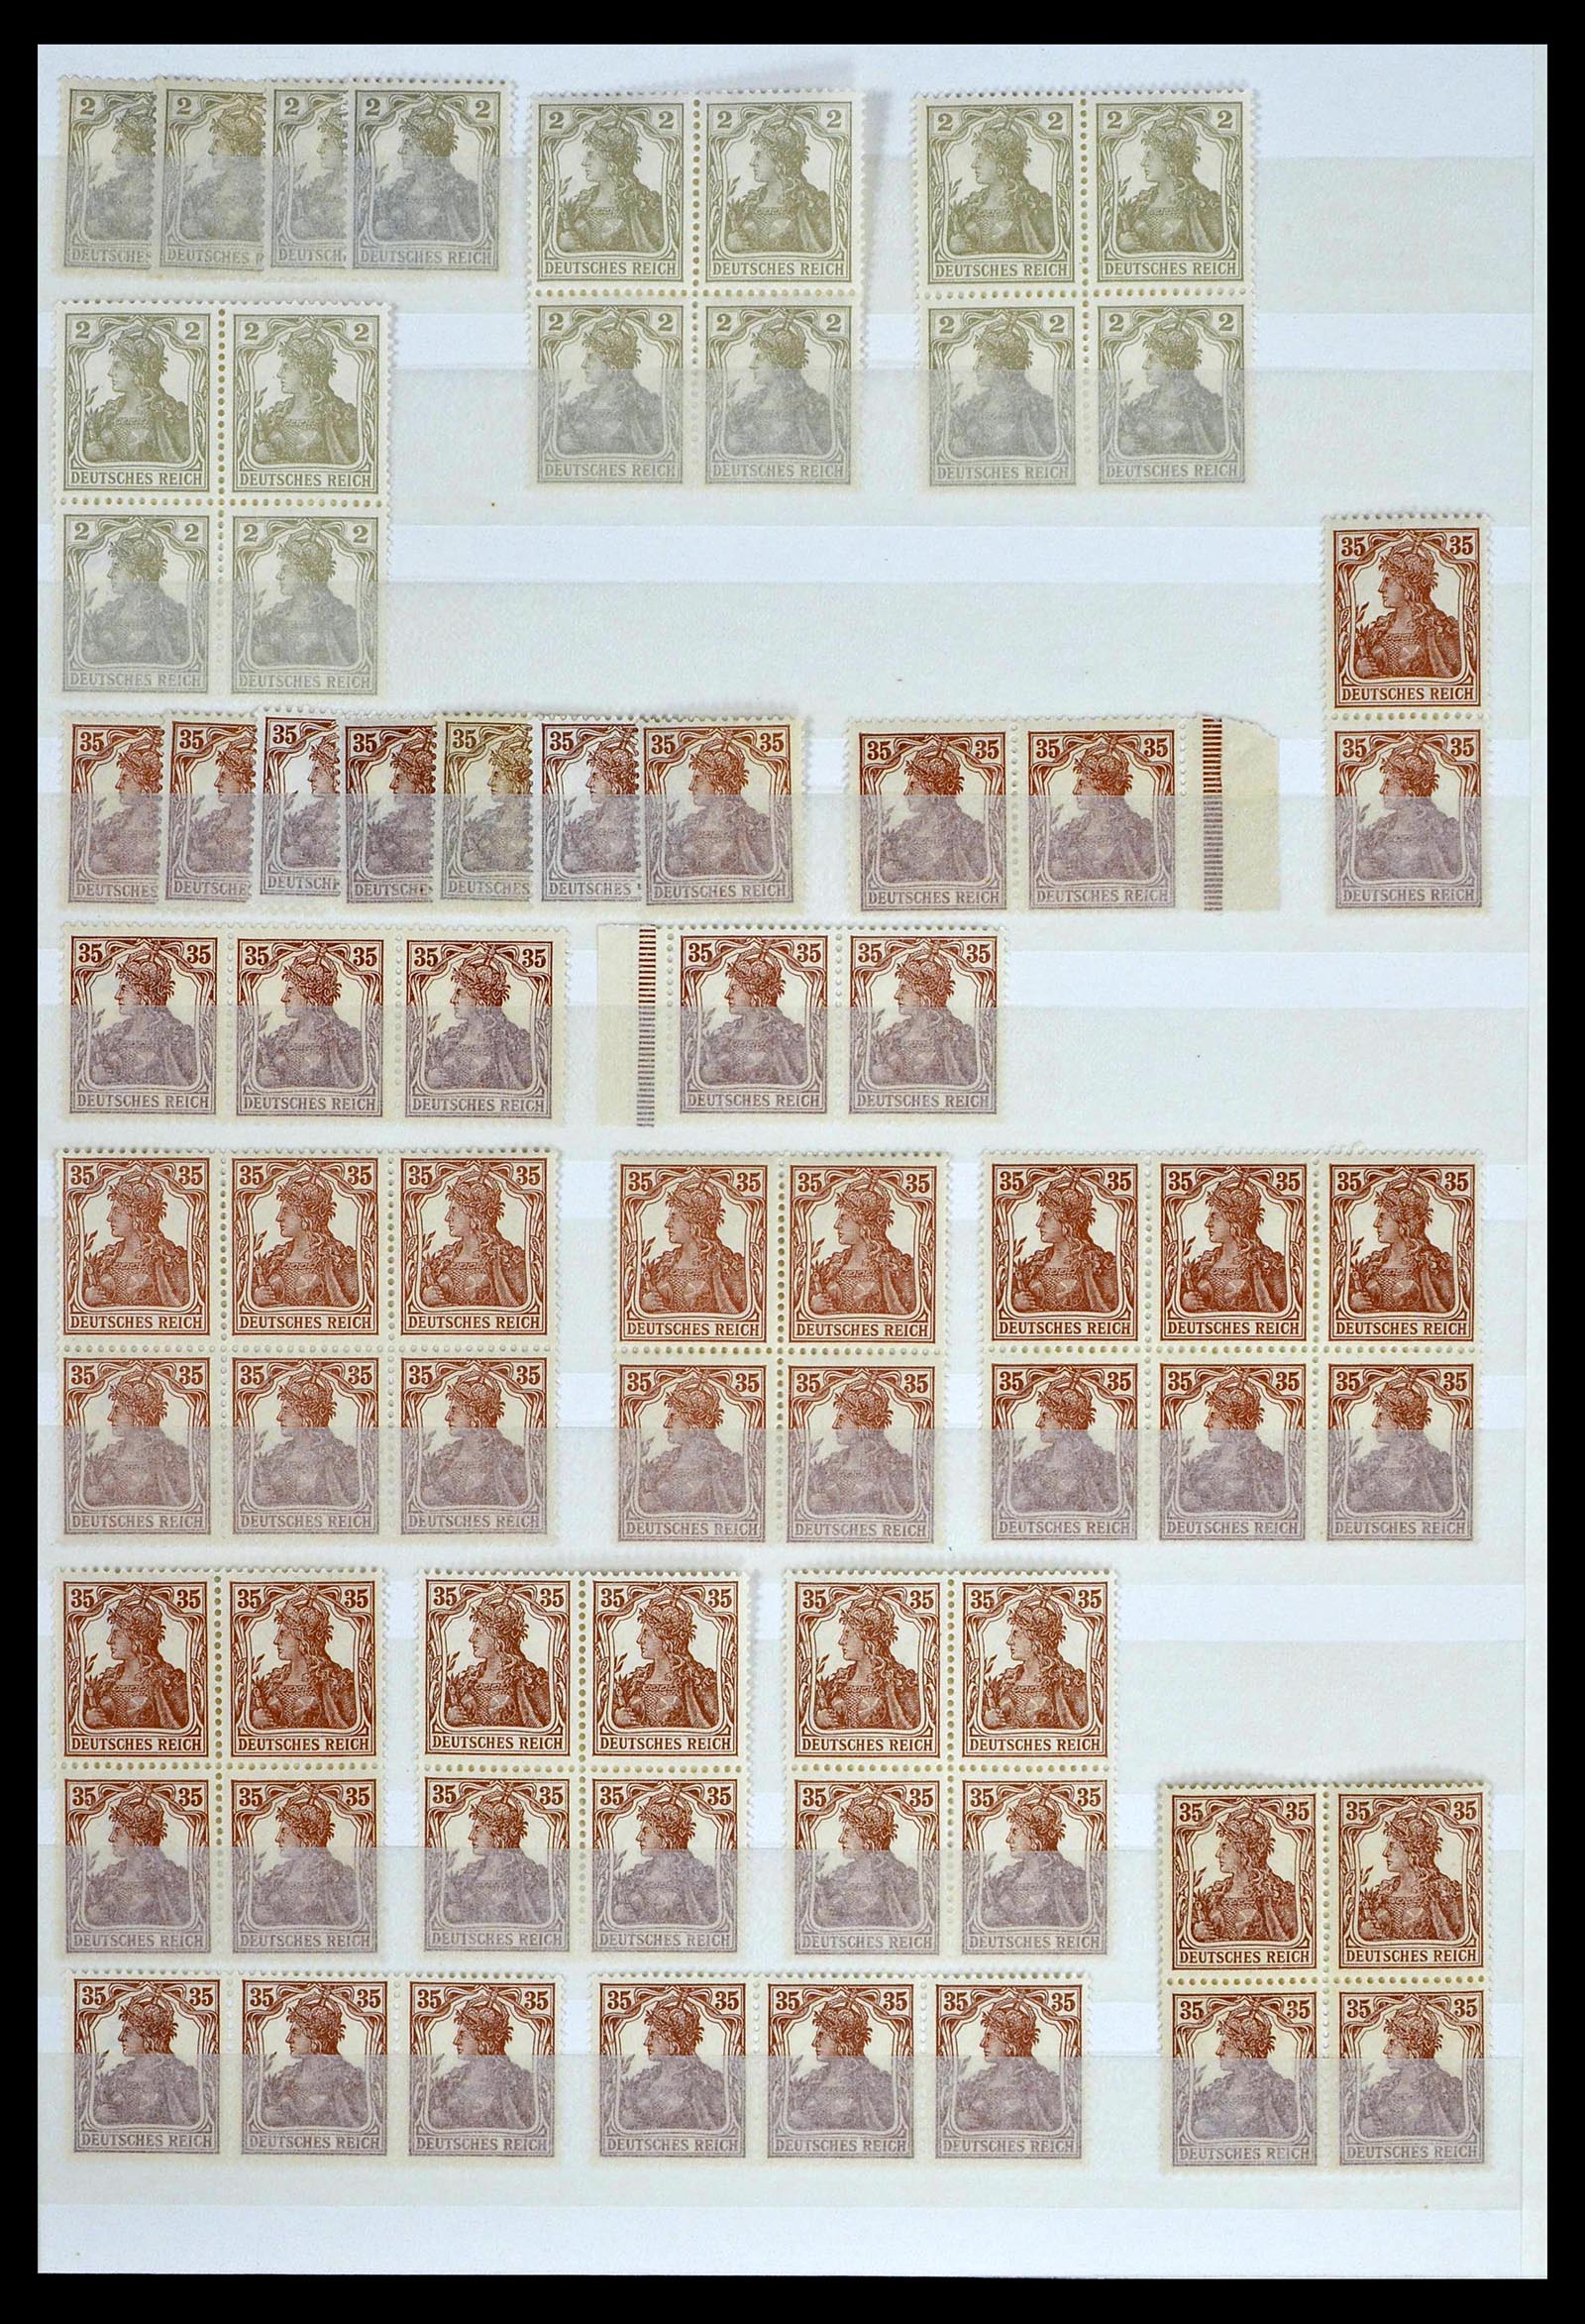 39256 0009 - Stamp collection 39256 German Reich MNH.